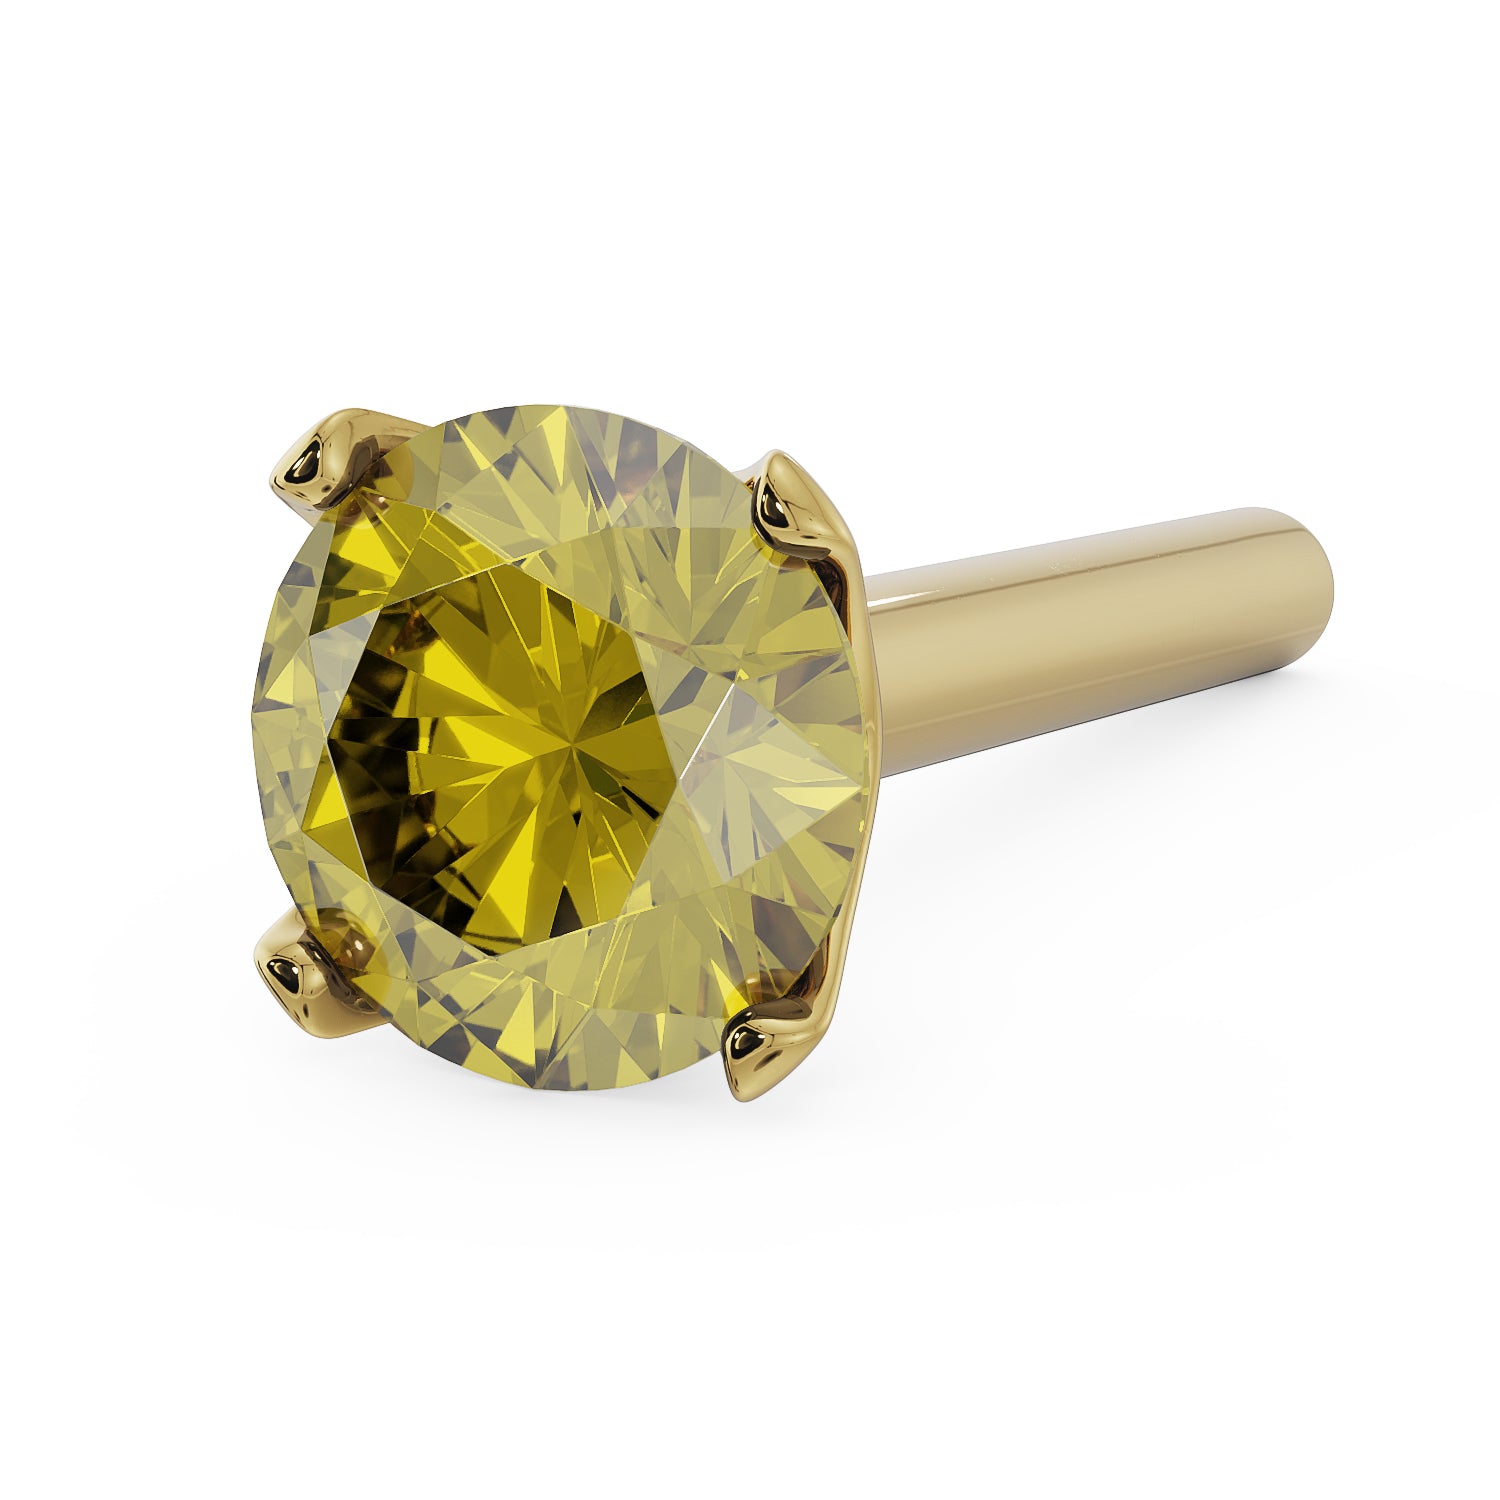 3mm Yellow Diamond Prong Nose Ring Stud